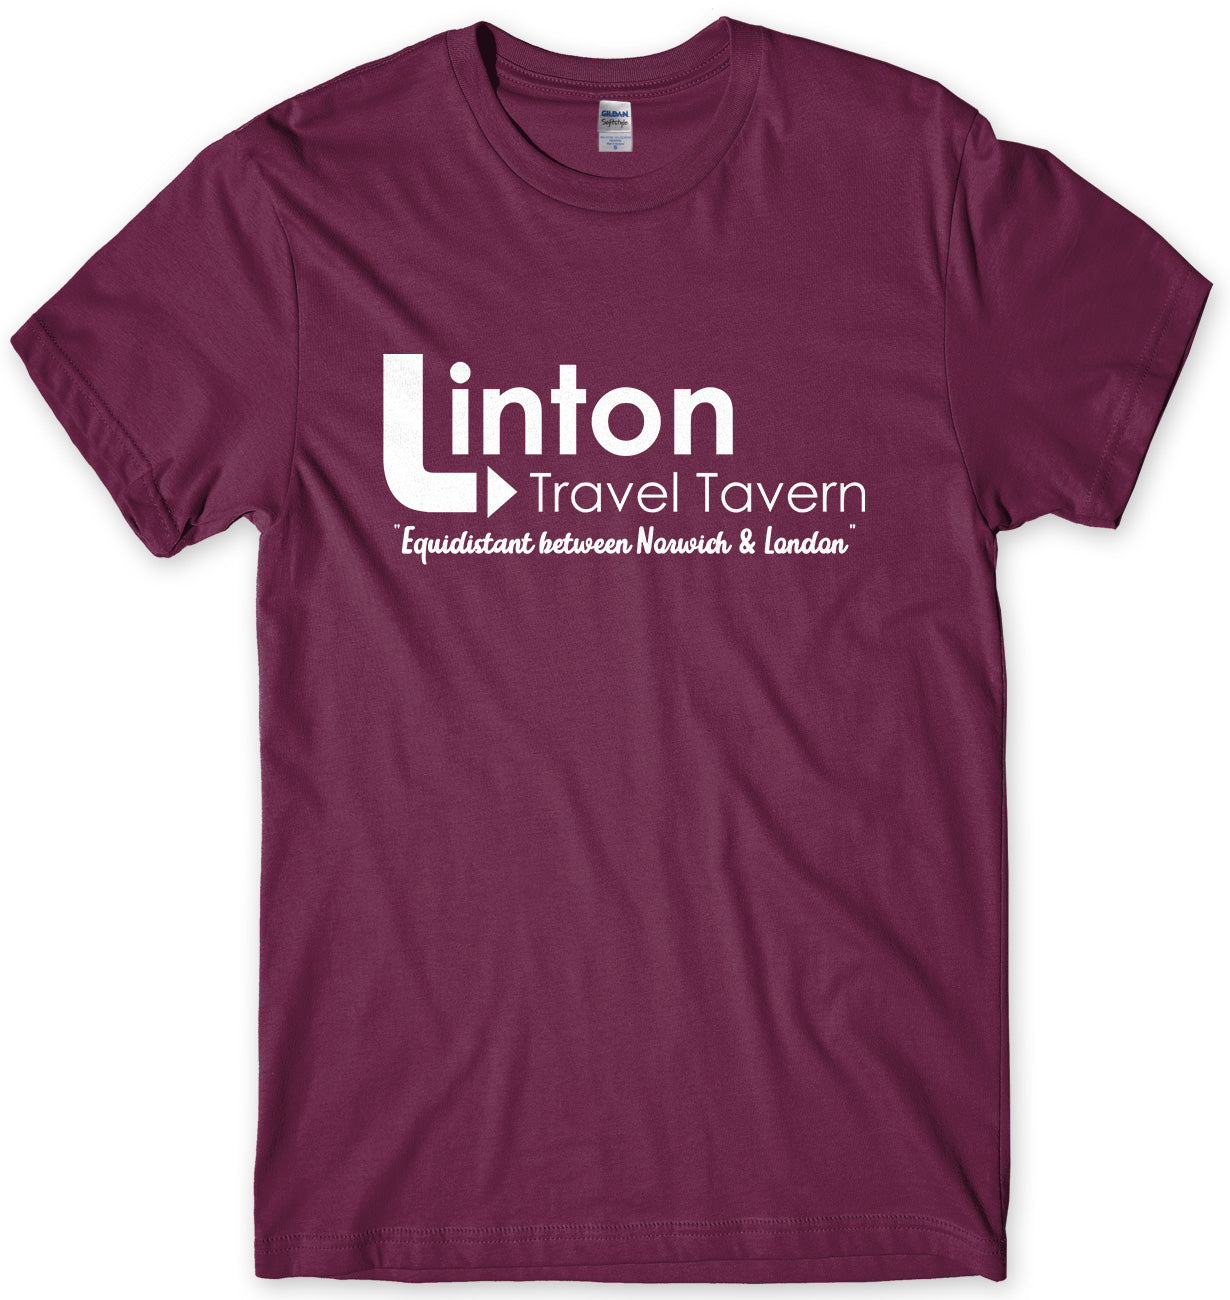 LINTON TRAVEL TAVERN - INSPIRED BY ALAN PARTRIDGE MENS UNISEX T-SHIRT